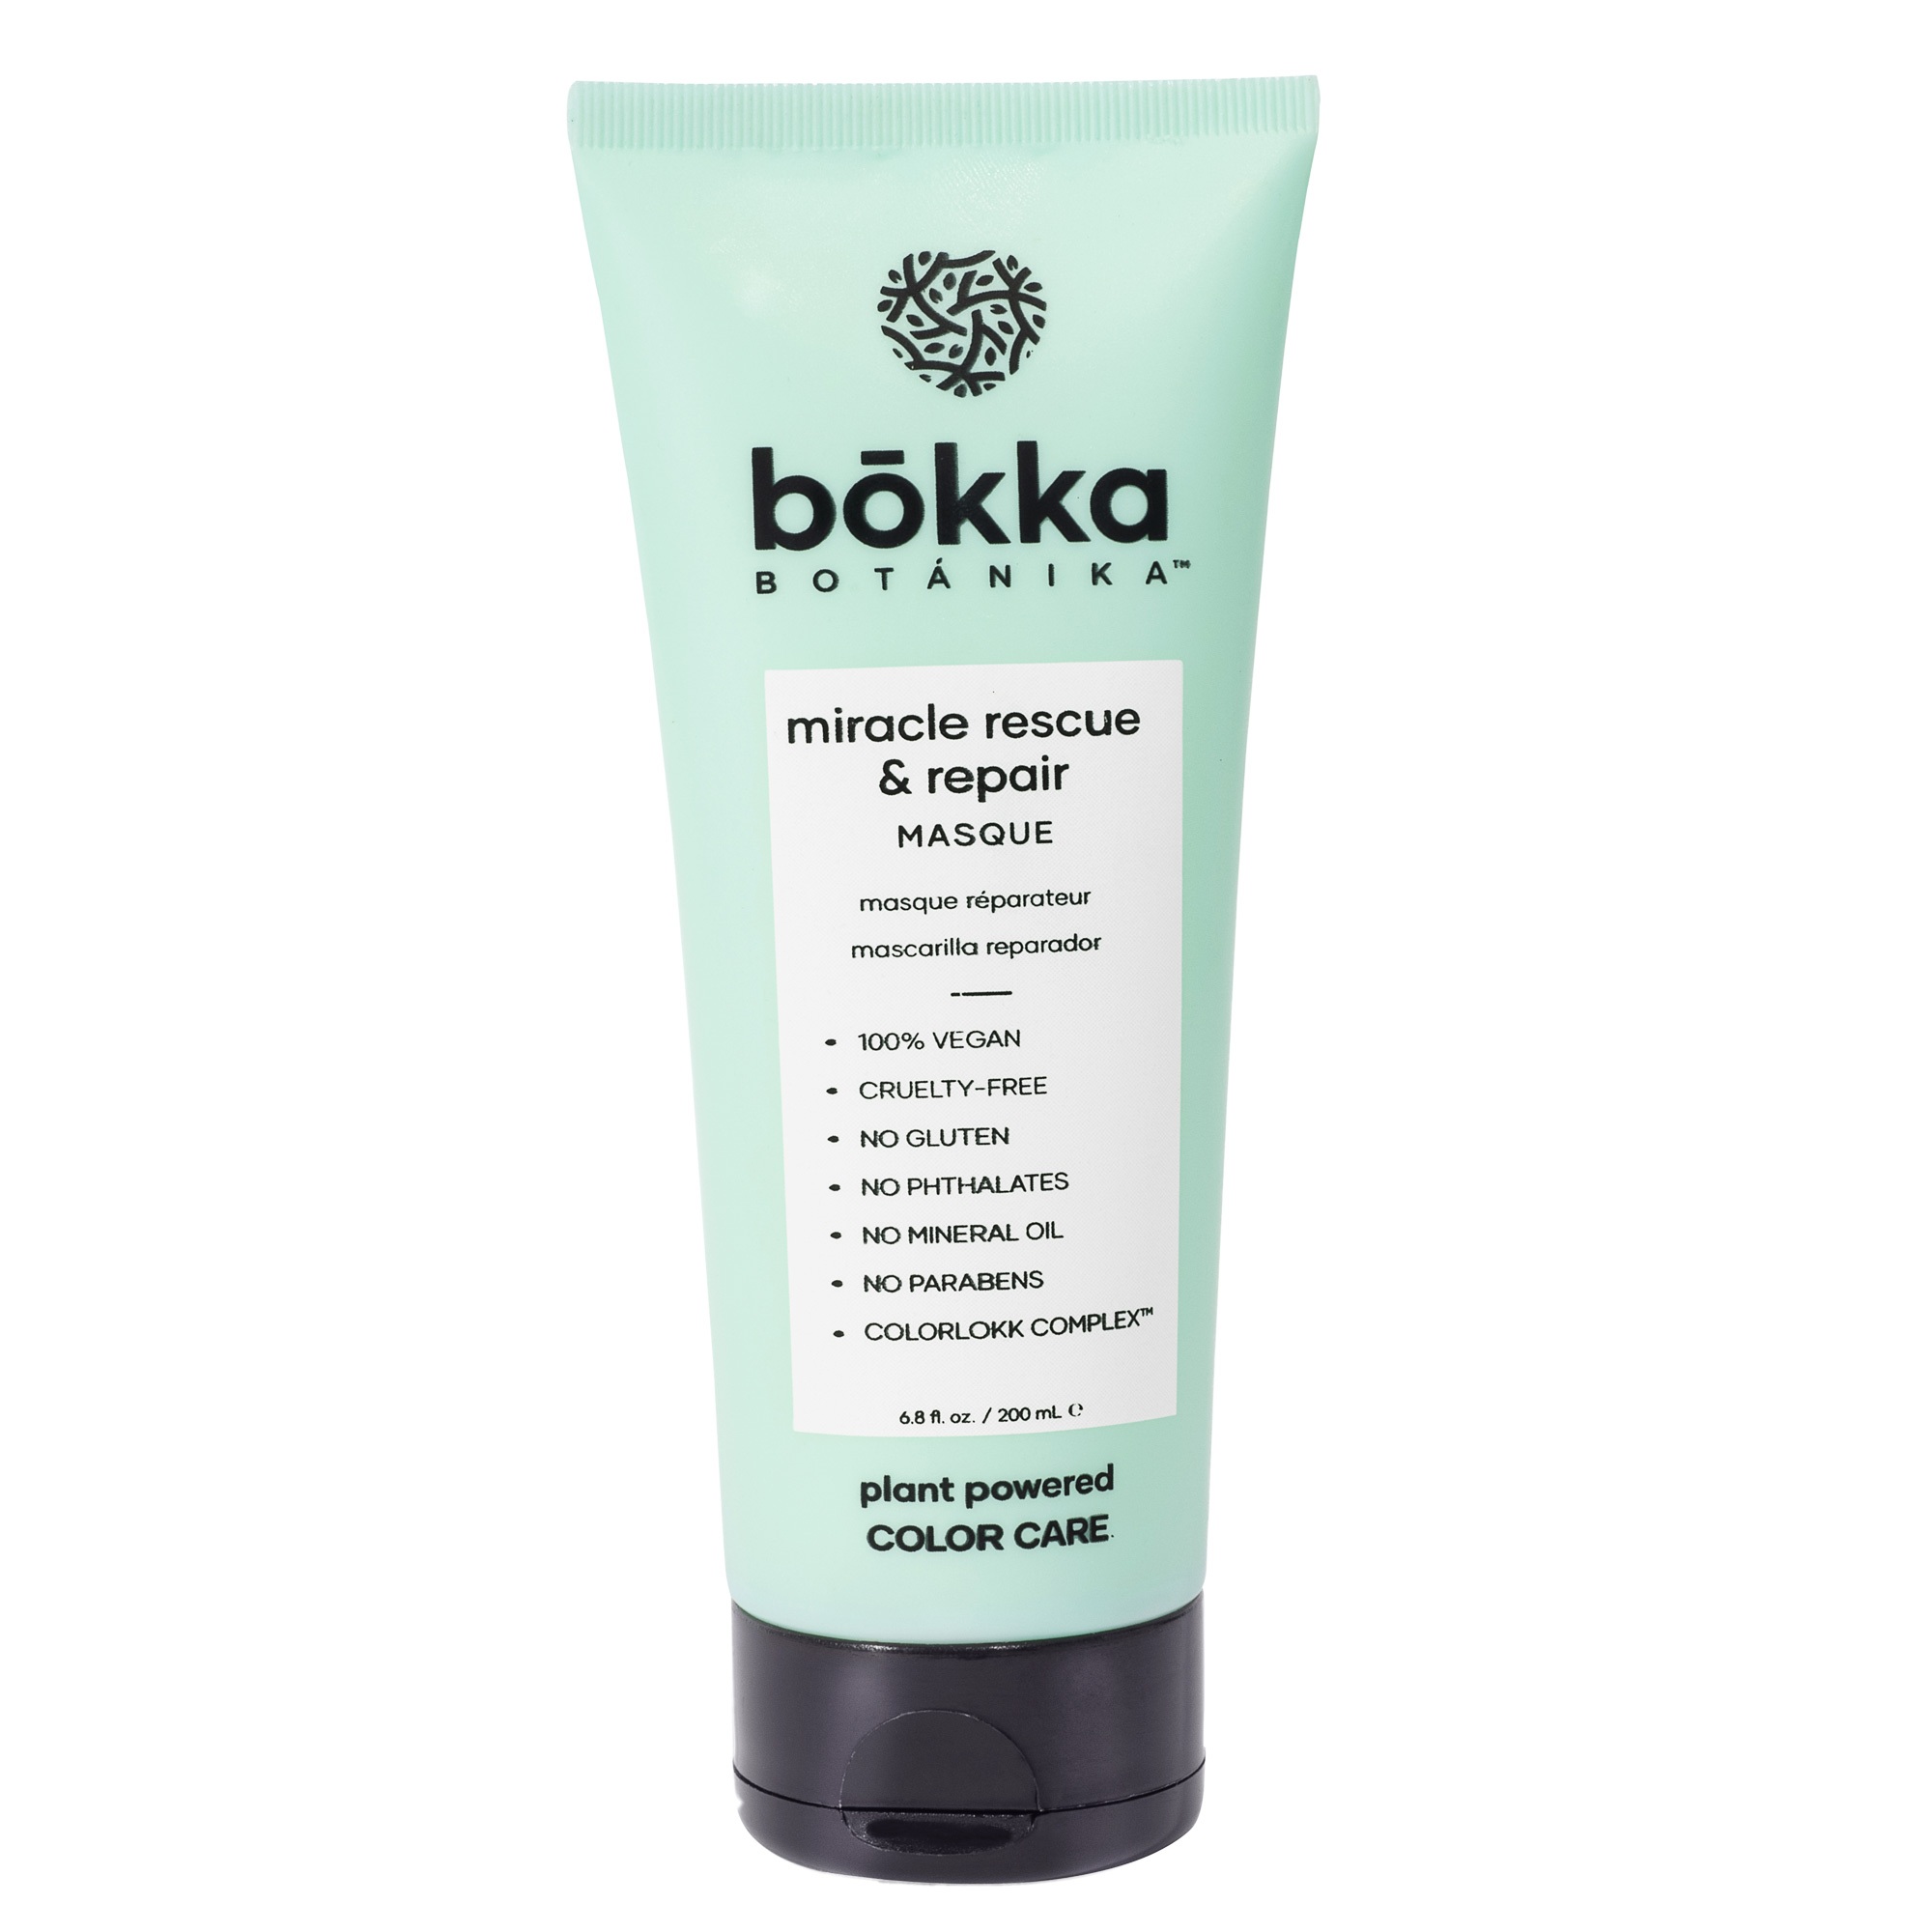 bokka BOTANIKA Miracle Rescue & Repair Masque